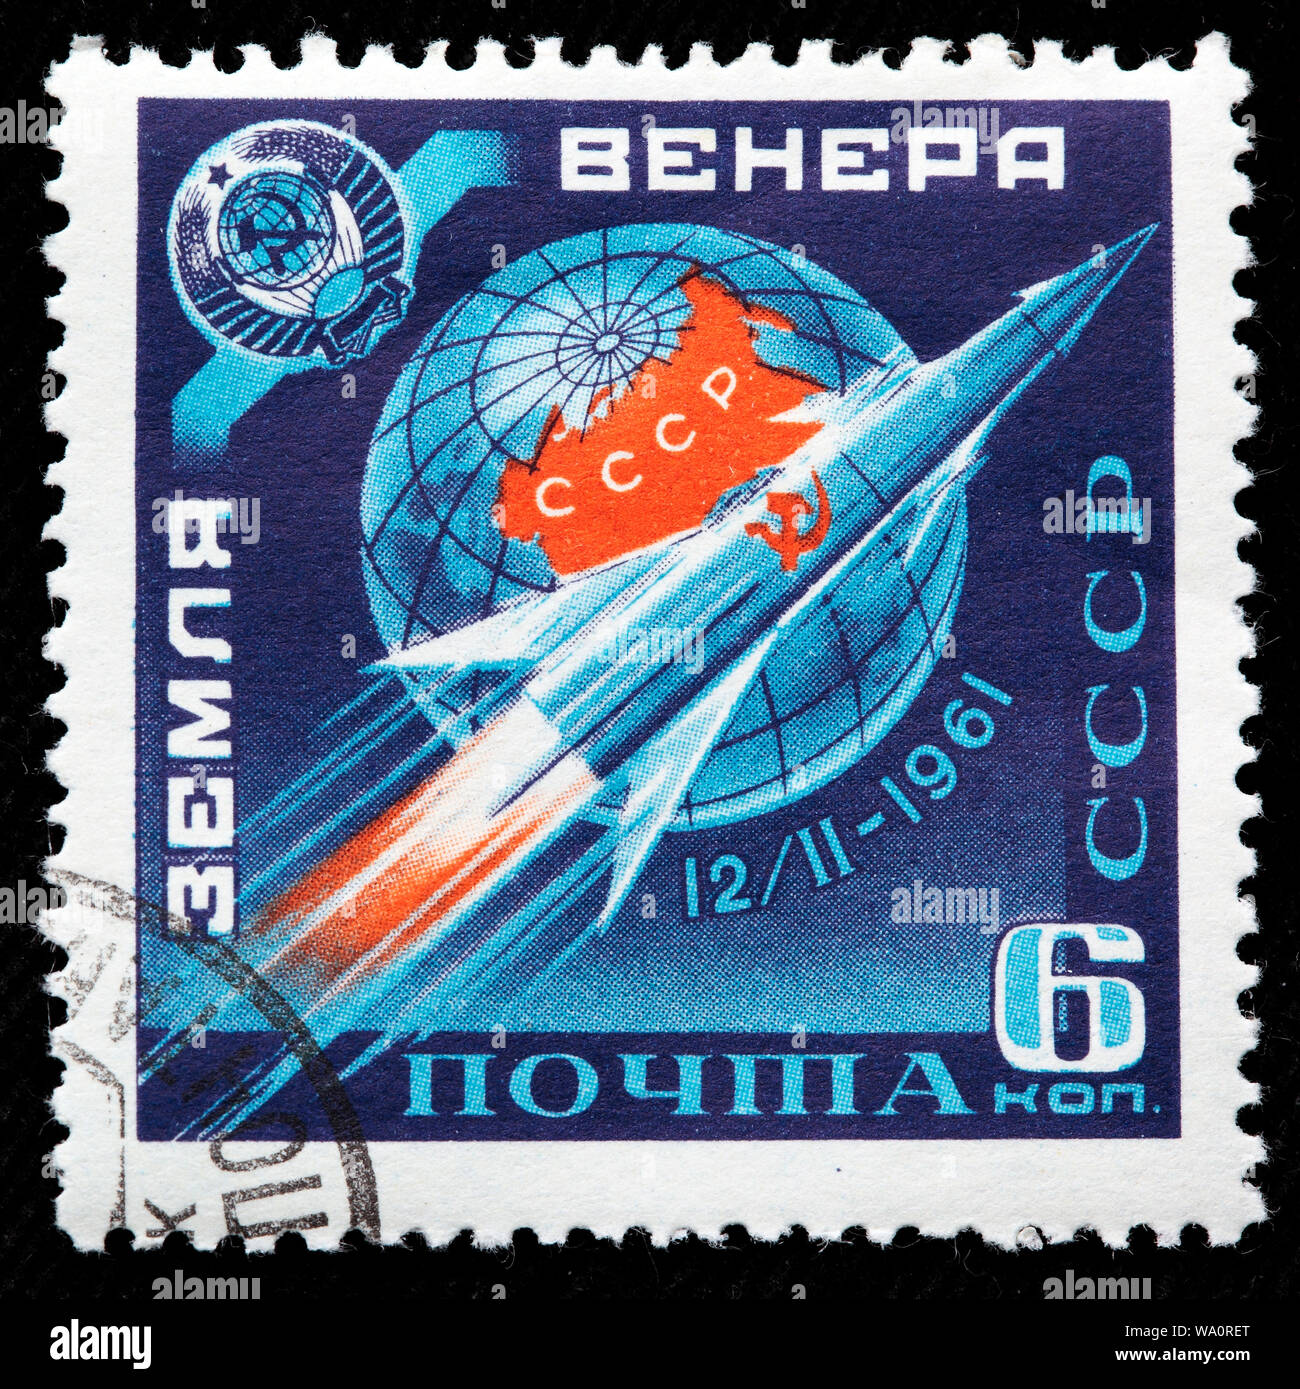 Soviet Robotics Spacecraft Venera-1, Launching of Space Probe to Venus, postage stamp, Russia, USSR, 1961 Stock Photo